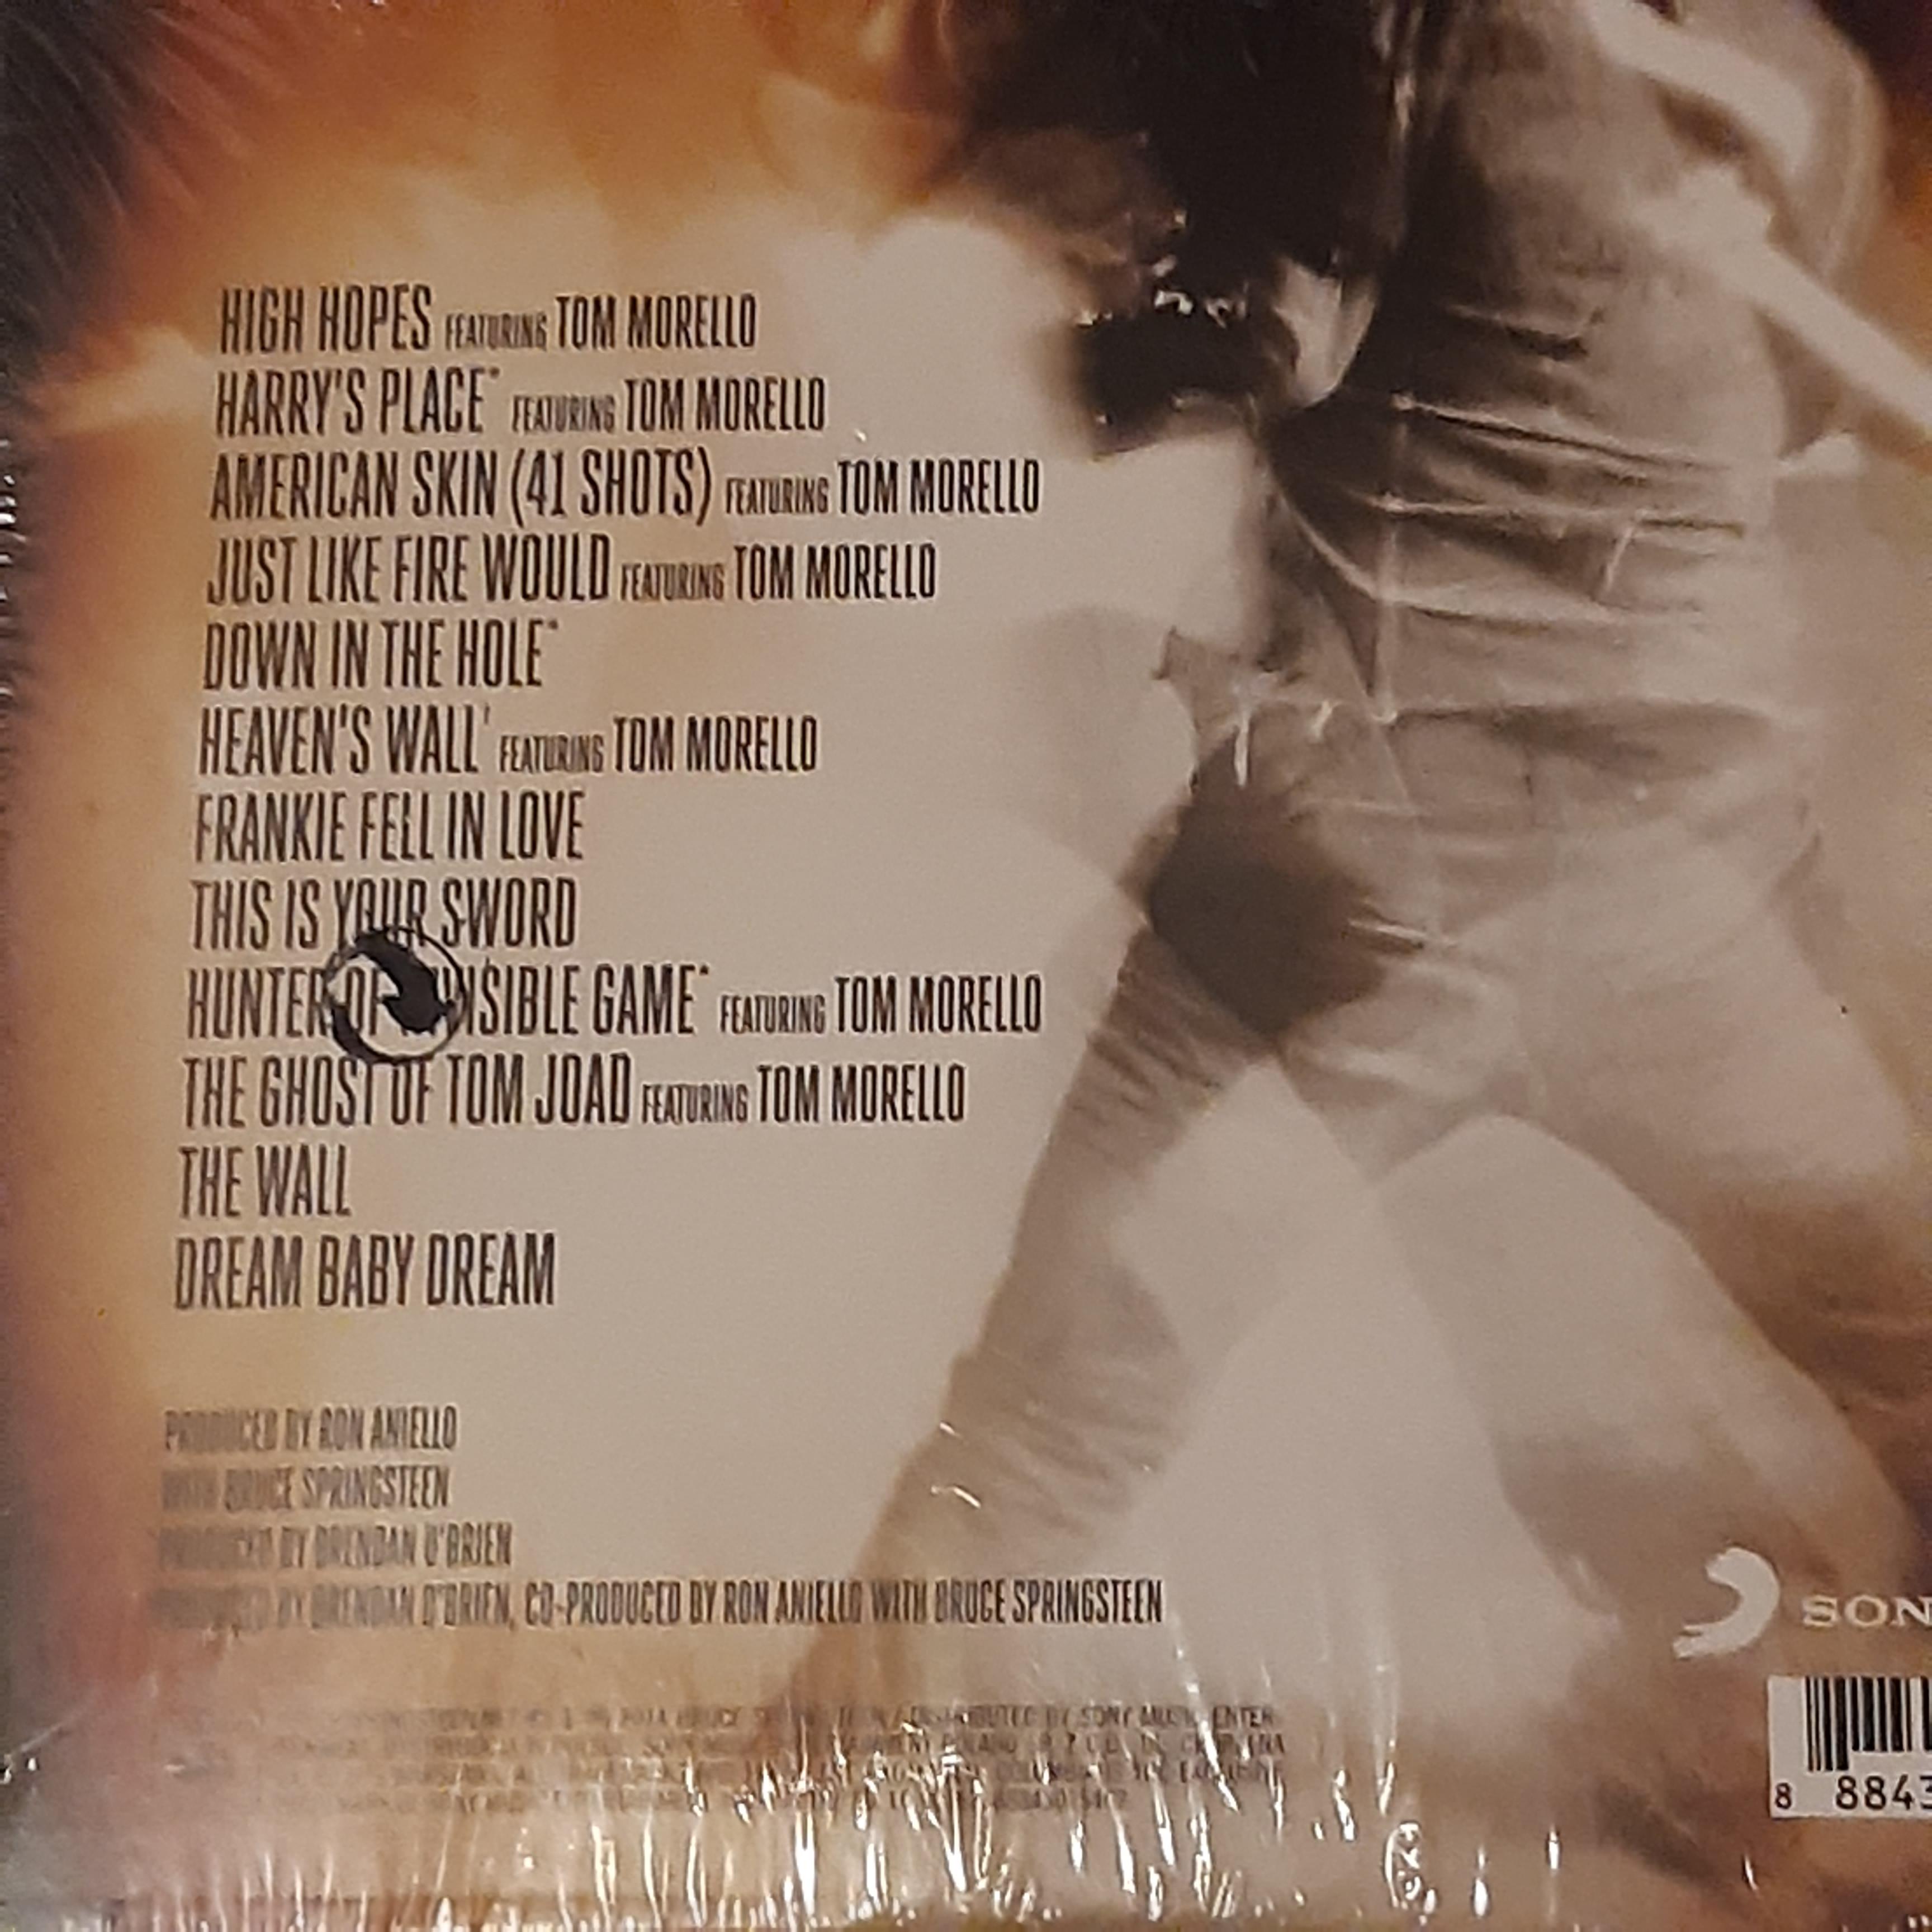 Bruce Springsteen - High Hopes - CD (uusi)